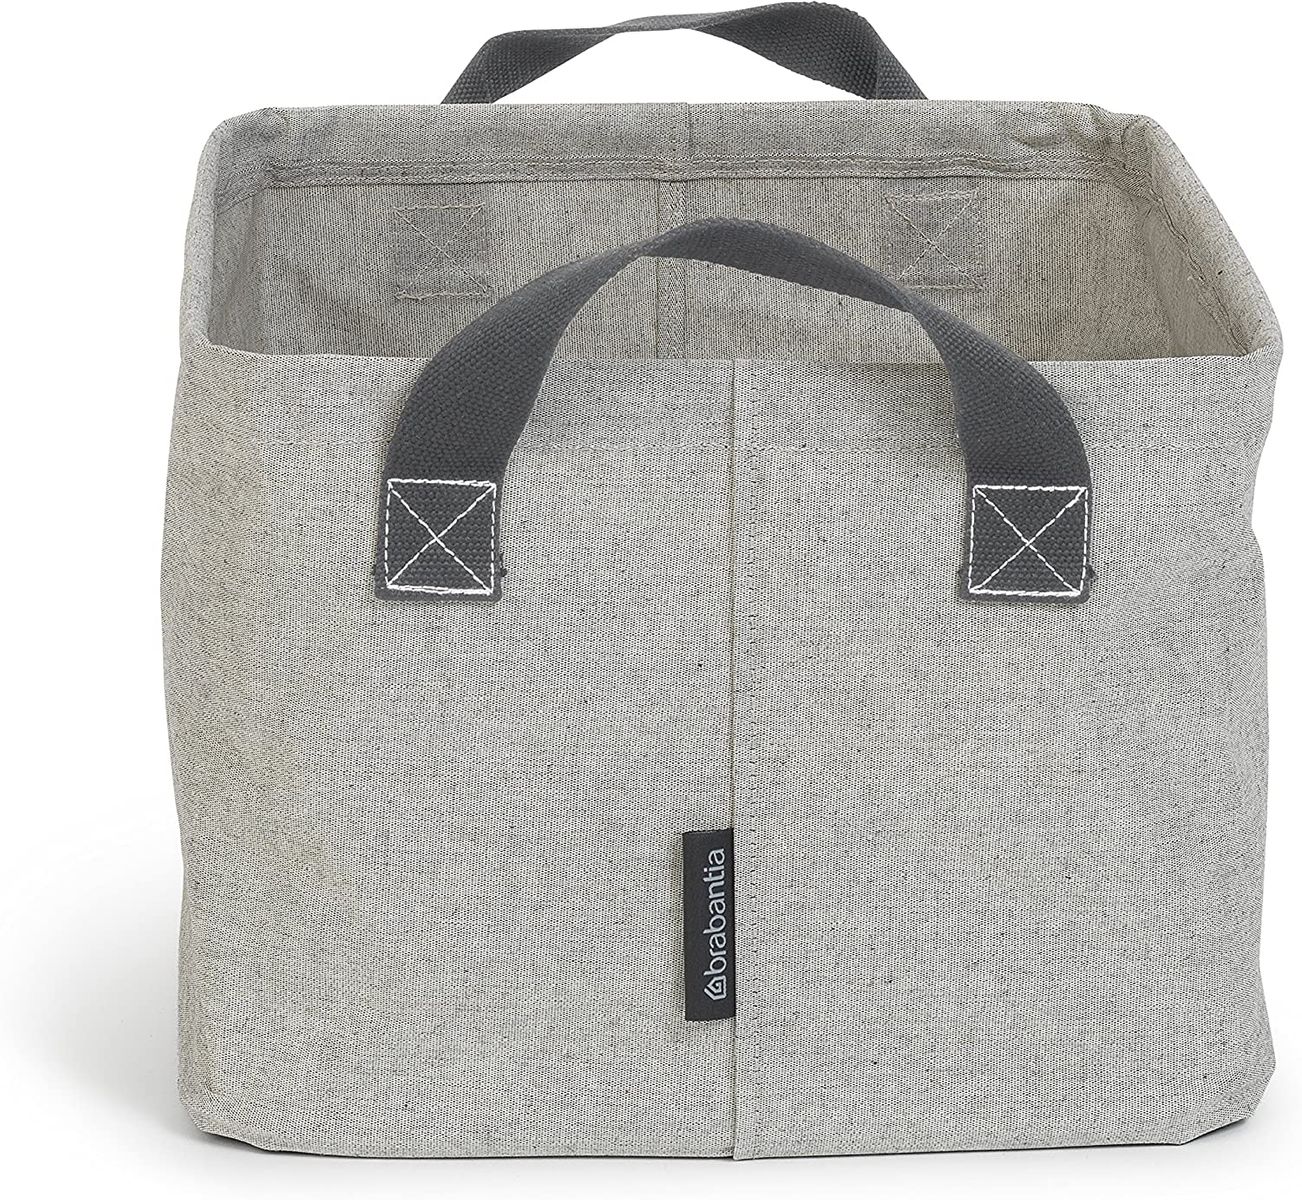 Brabantia 105685 Laundry basket foldable in gray, fabric, 30 x 20 x 10 cm